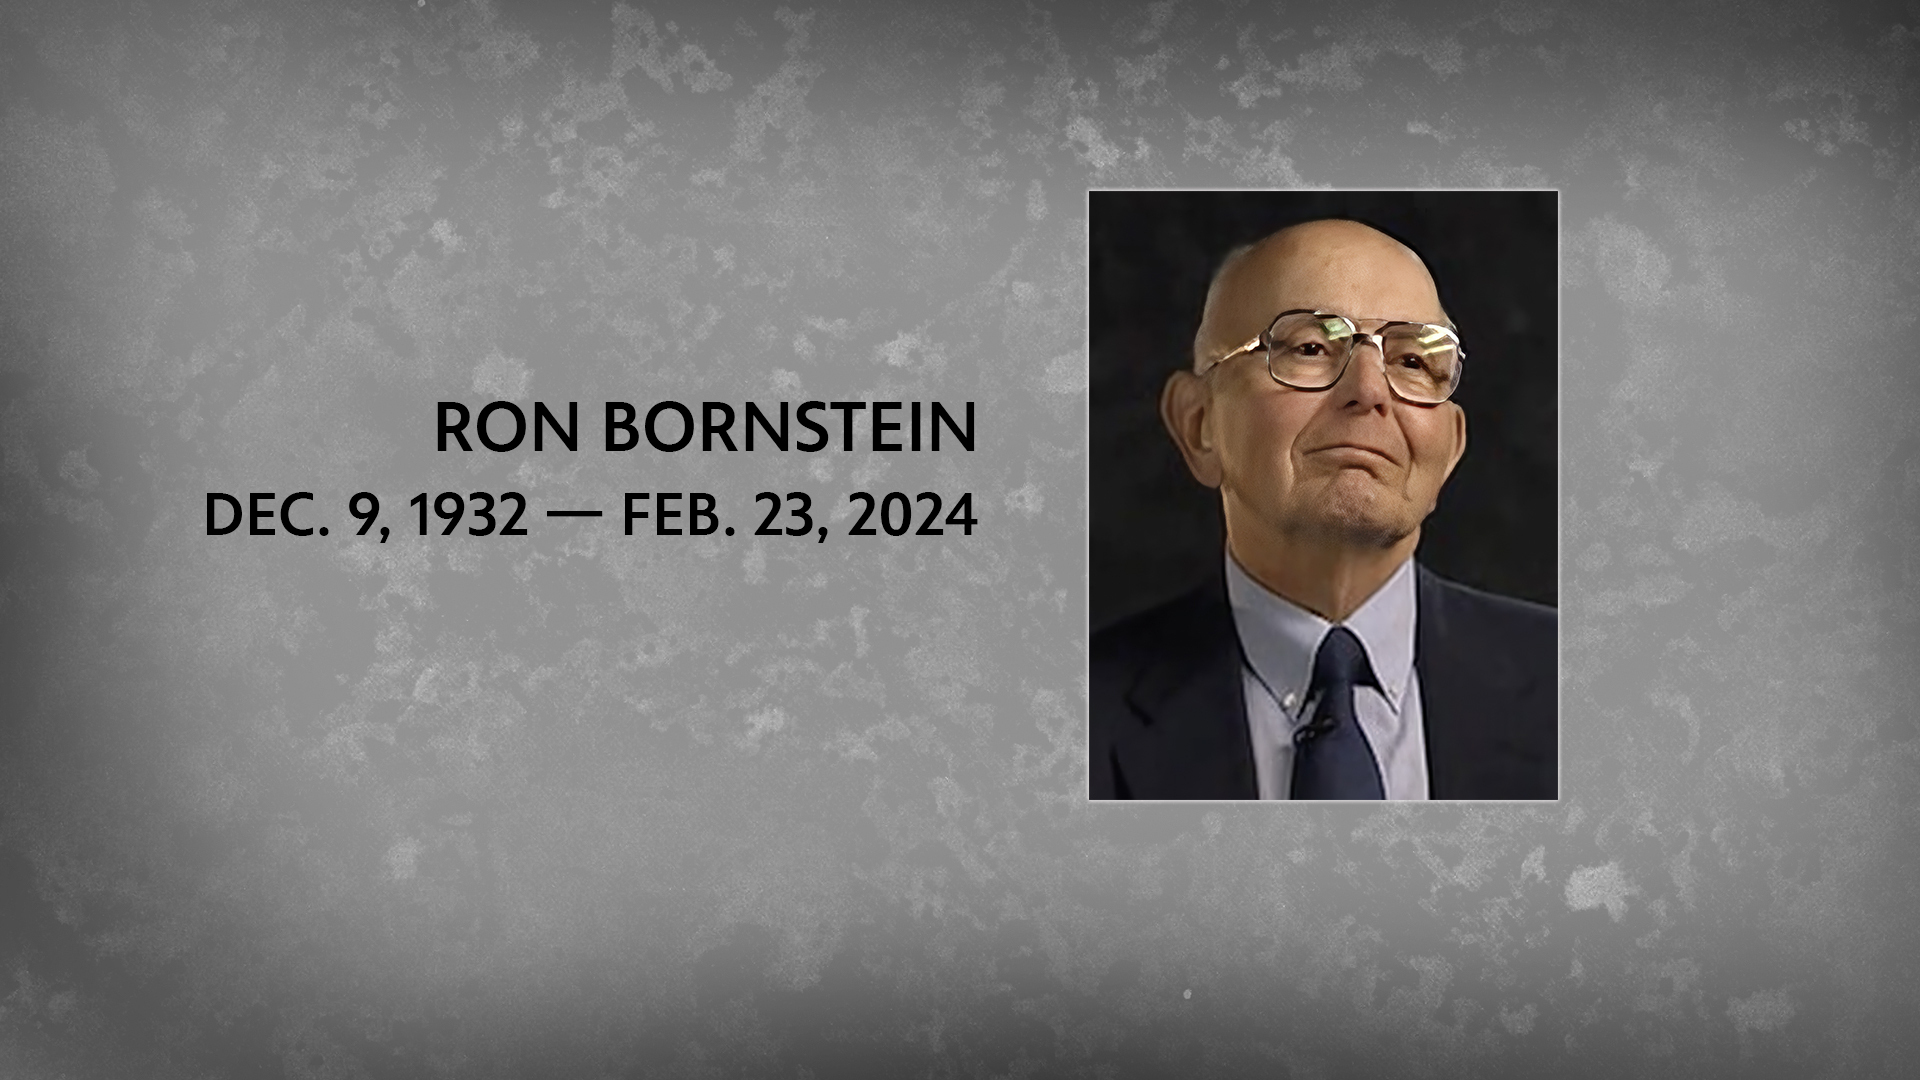 A memorial headshot of Ron Bornstein in a suit and tie, Dec. 9, 1932 — Feb. 23, 2024.